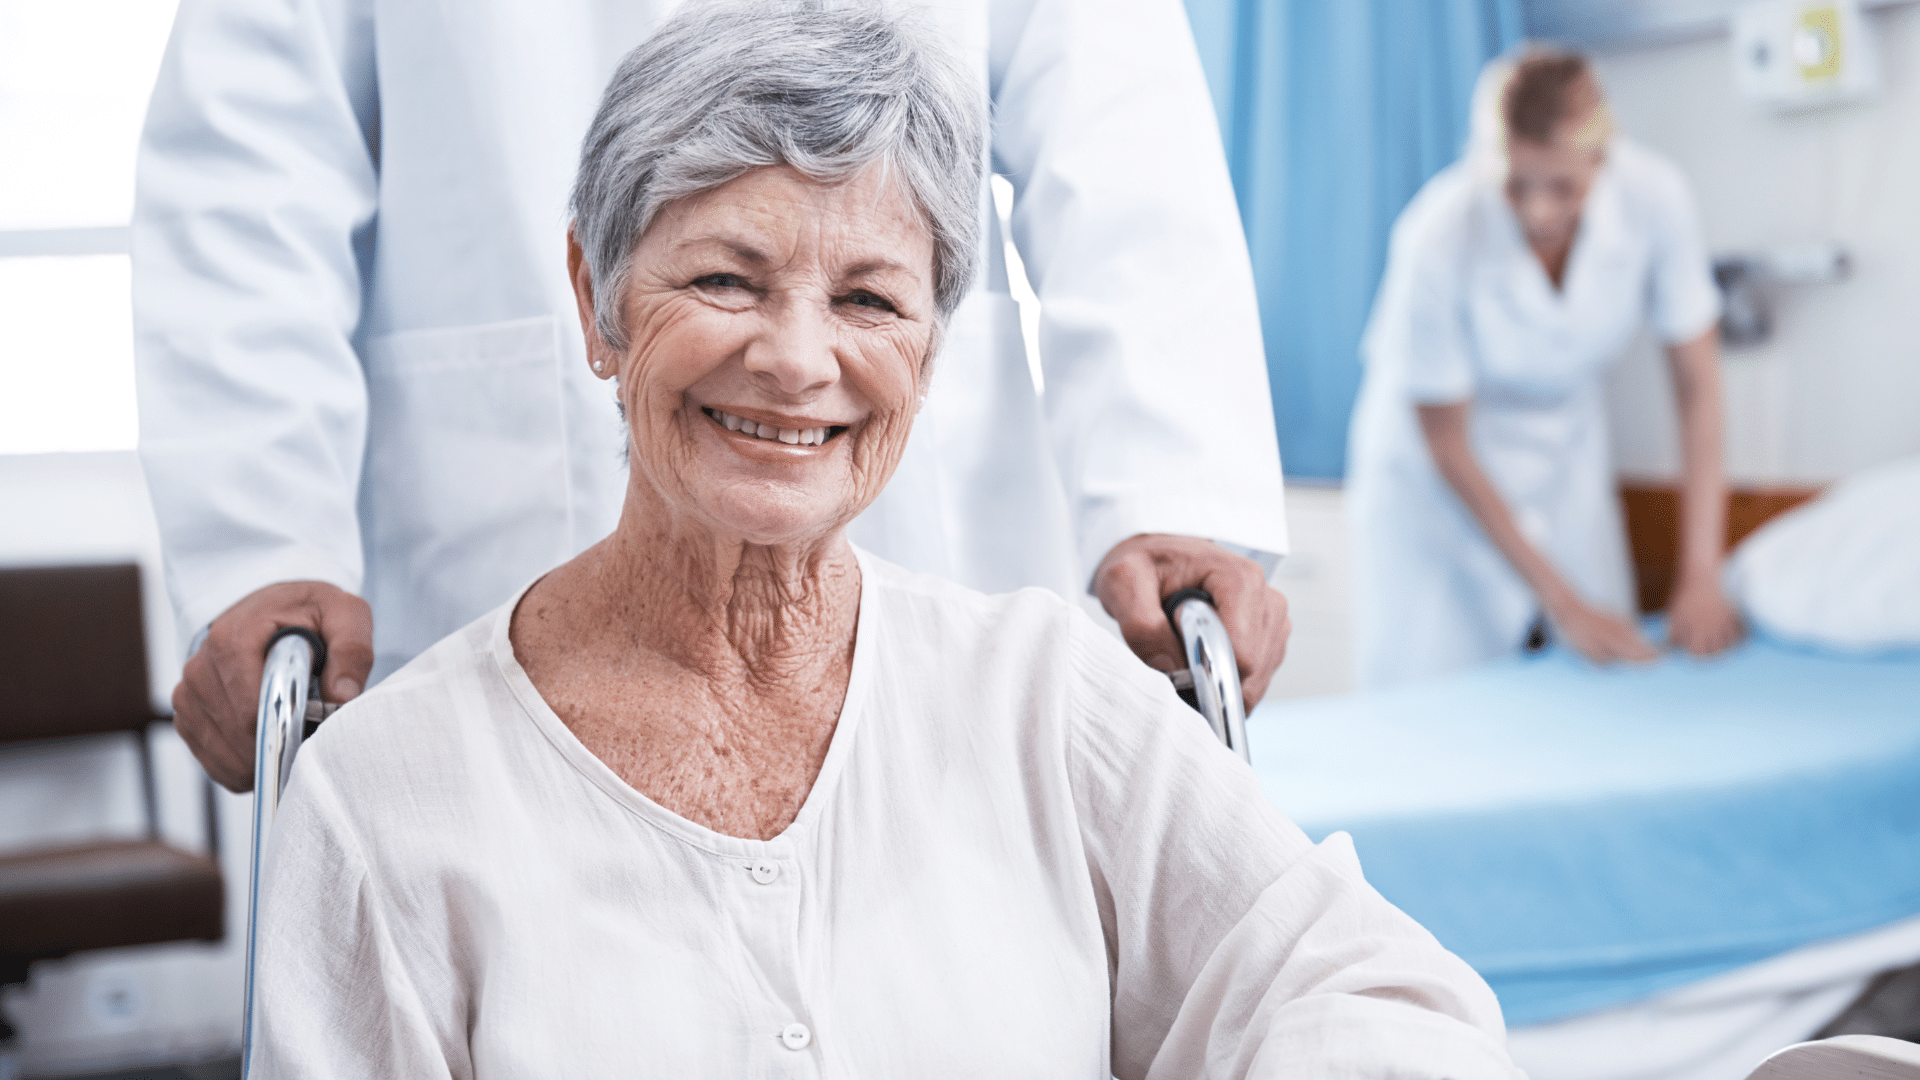 A cheerful elderly woman in a wheelchair accompanied by a nurse, both wearing warm smiles.